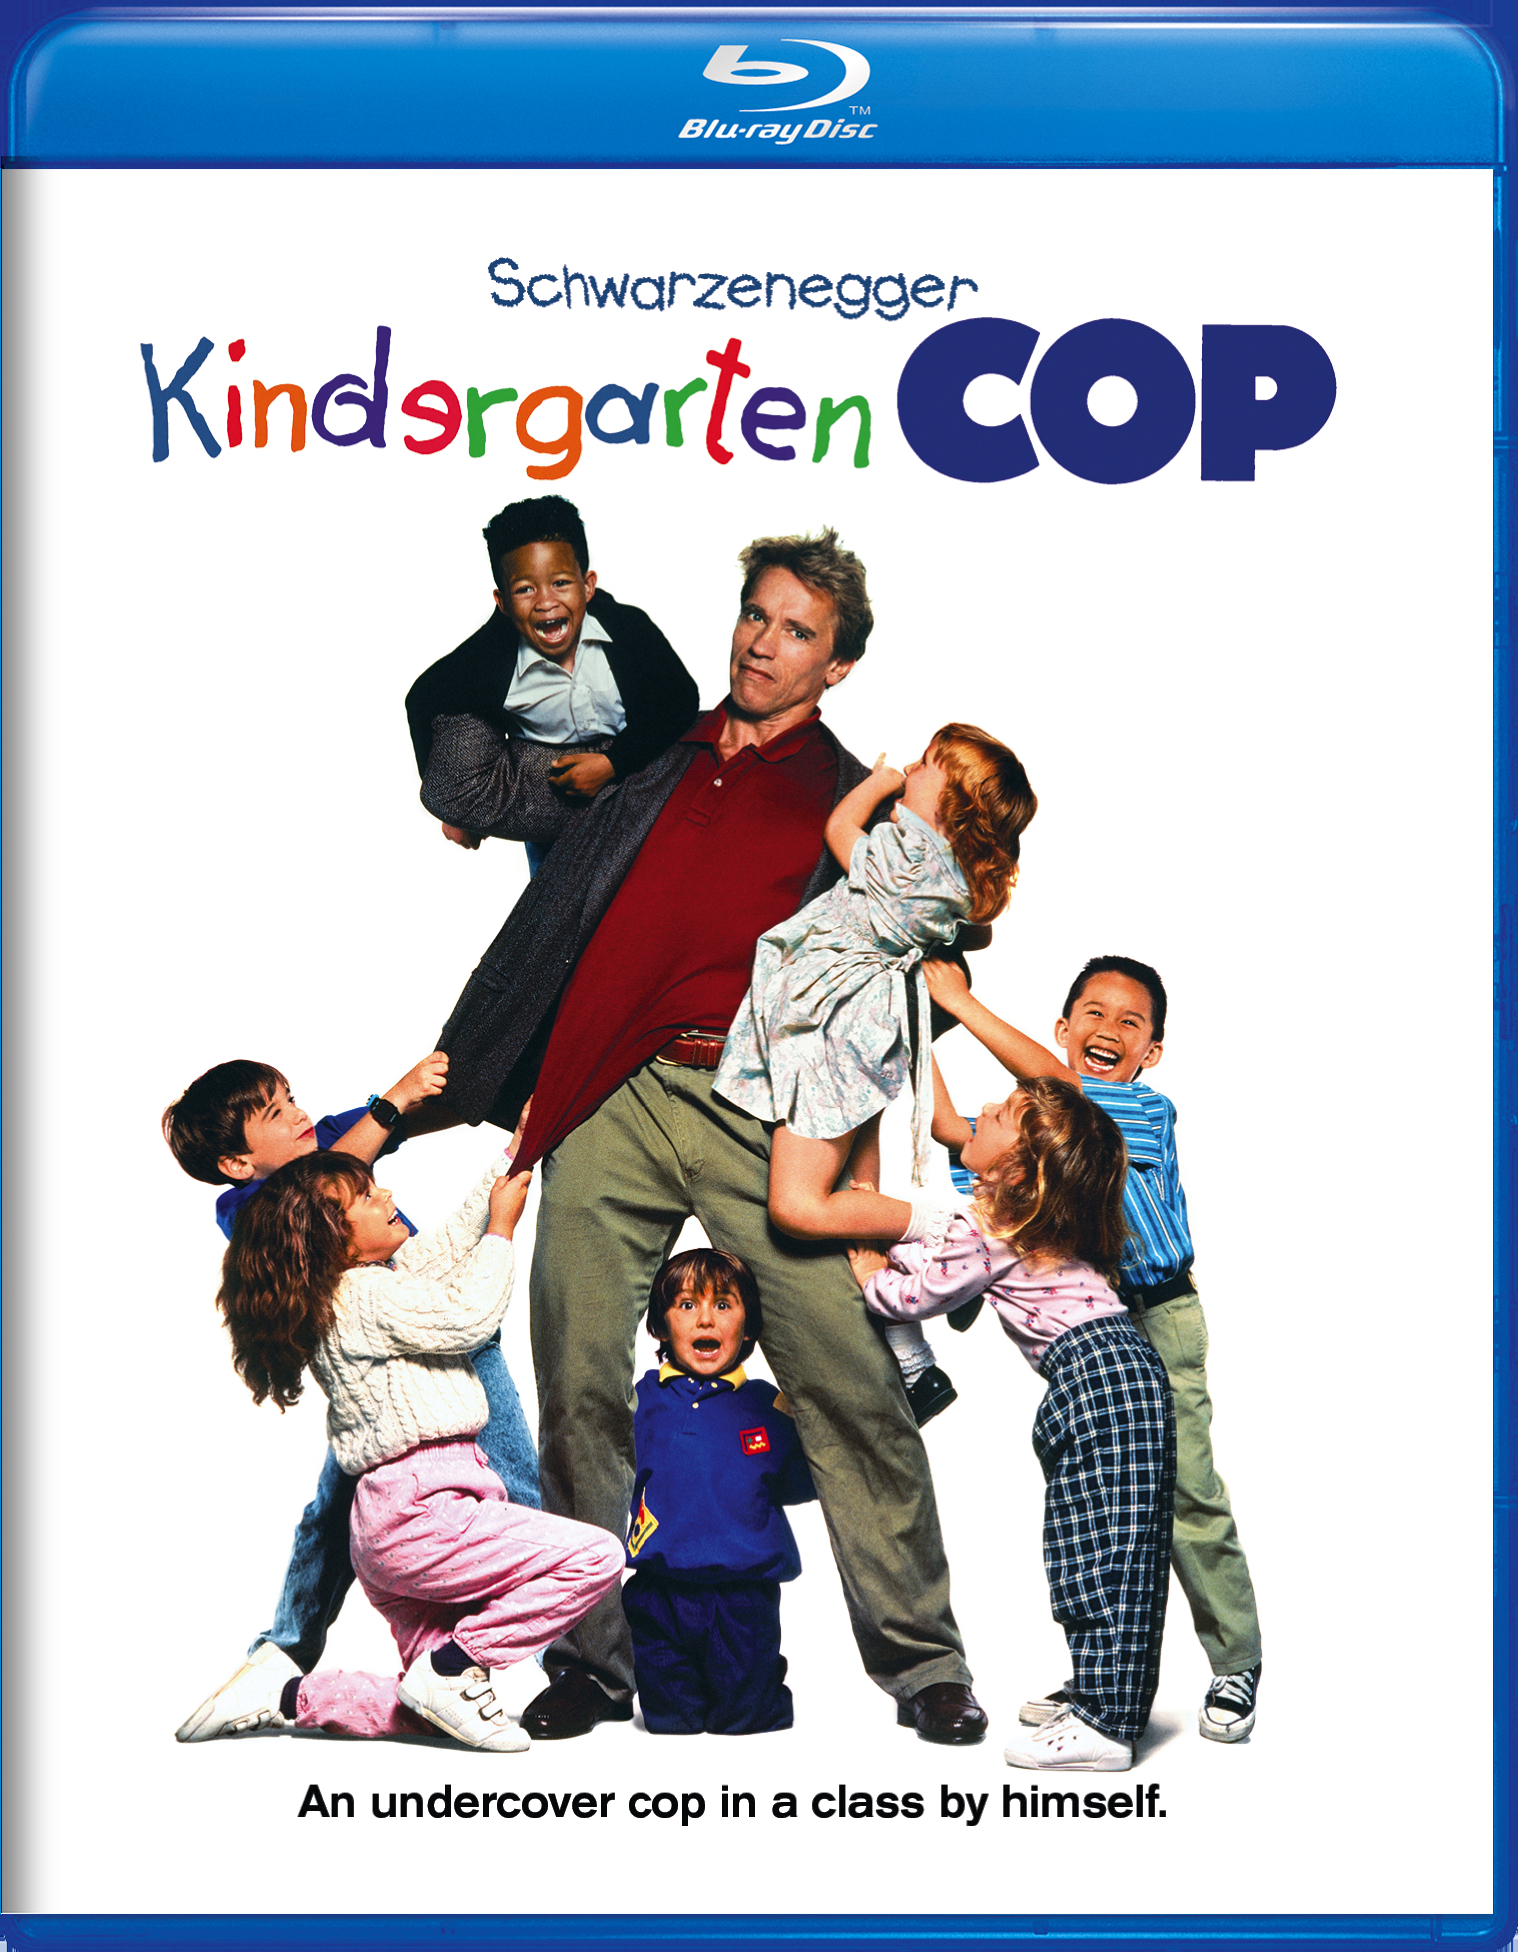 Kindergarten Cop (Blu-ray New Box Art) - Blu-ray [ 1990 ]  - Comedy Movies On Blu-ray - Movies On GRUV